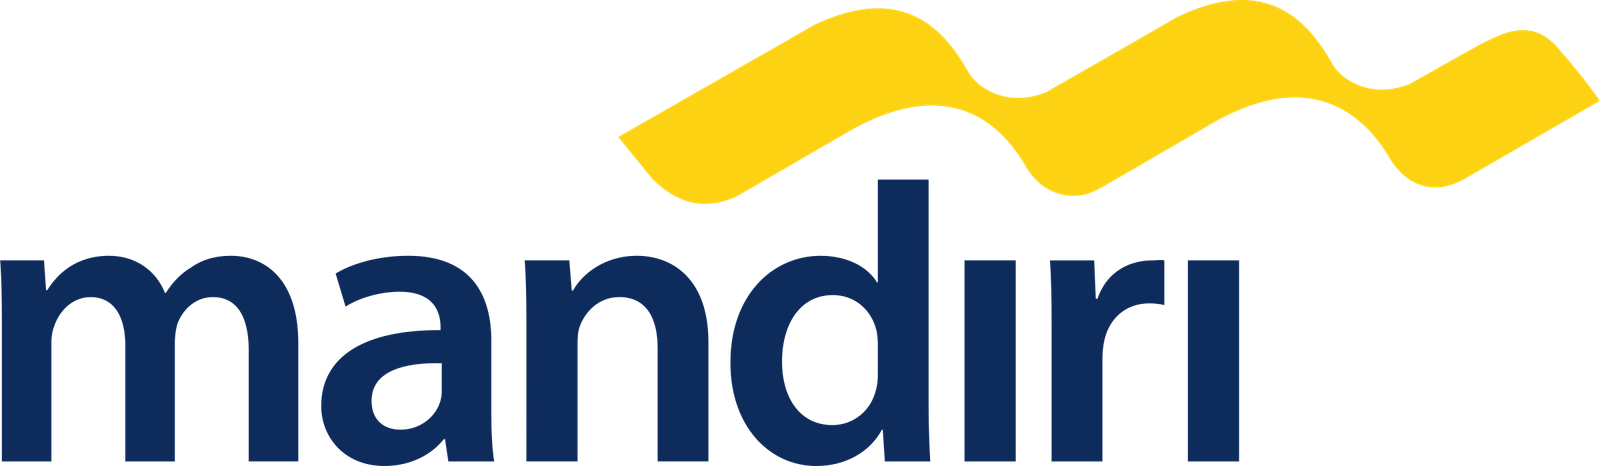 mandiri logo